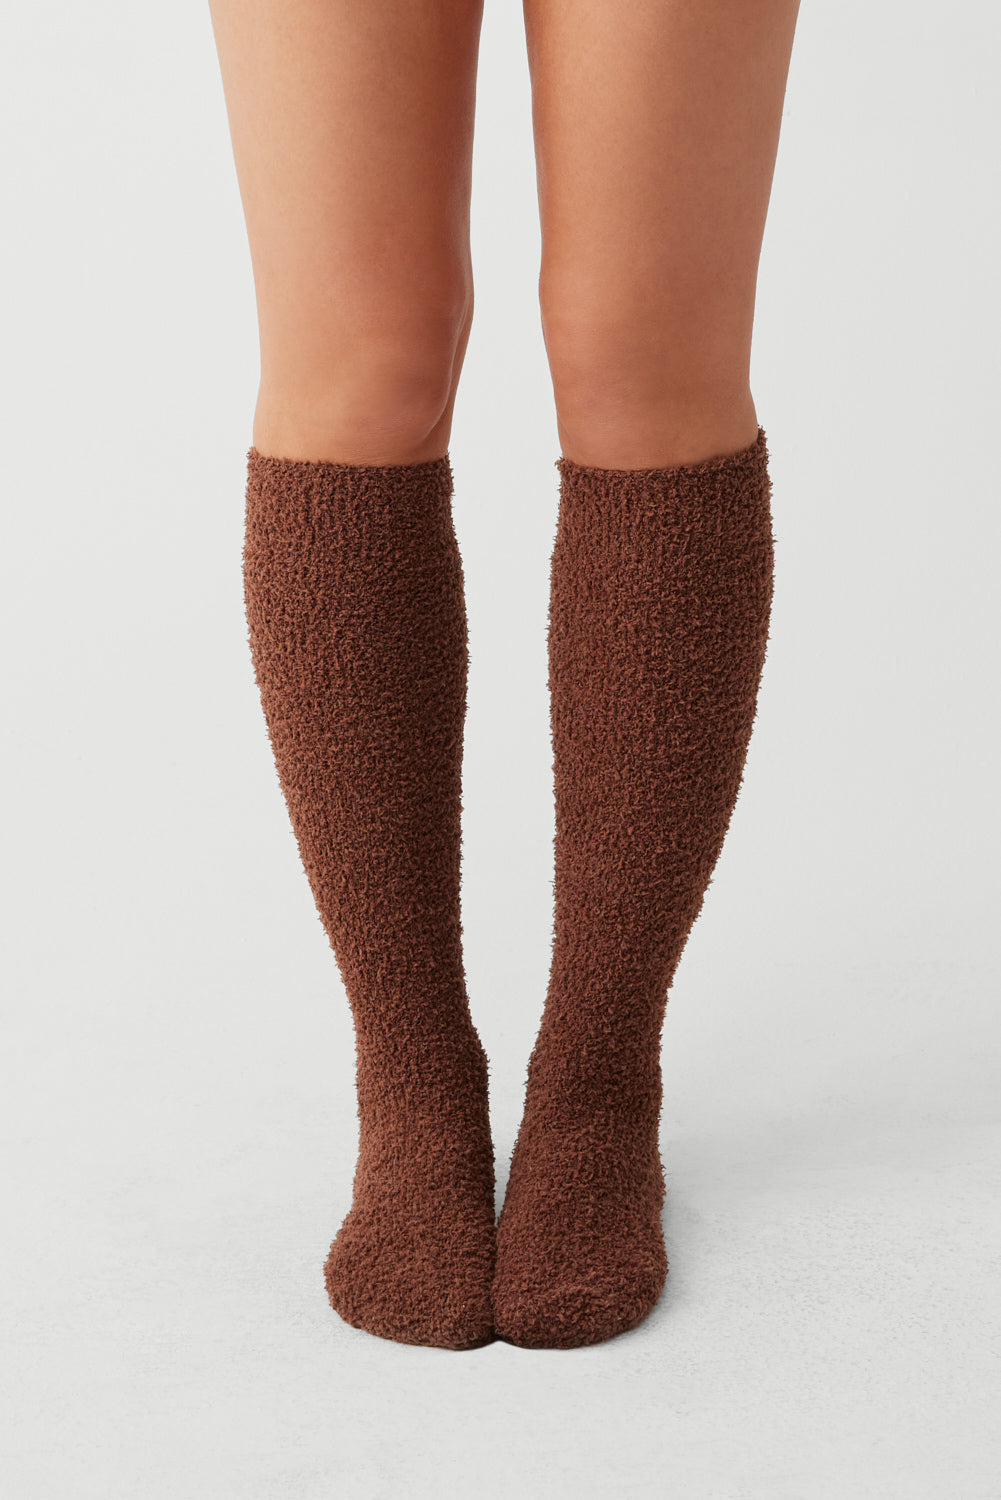 Cuddle Fuzzy High Socks - Chocolate Lily